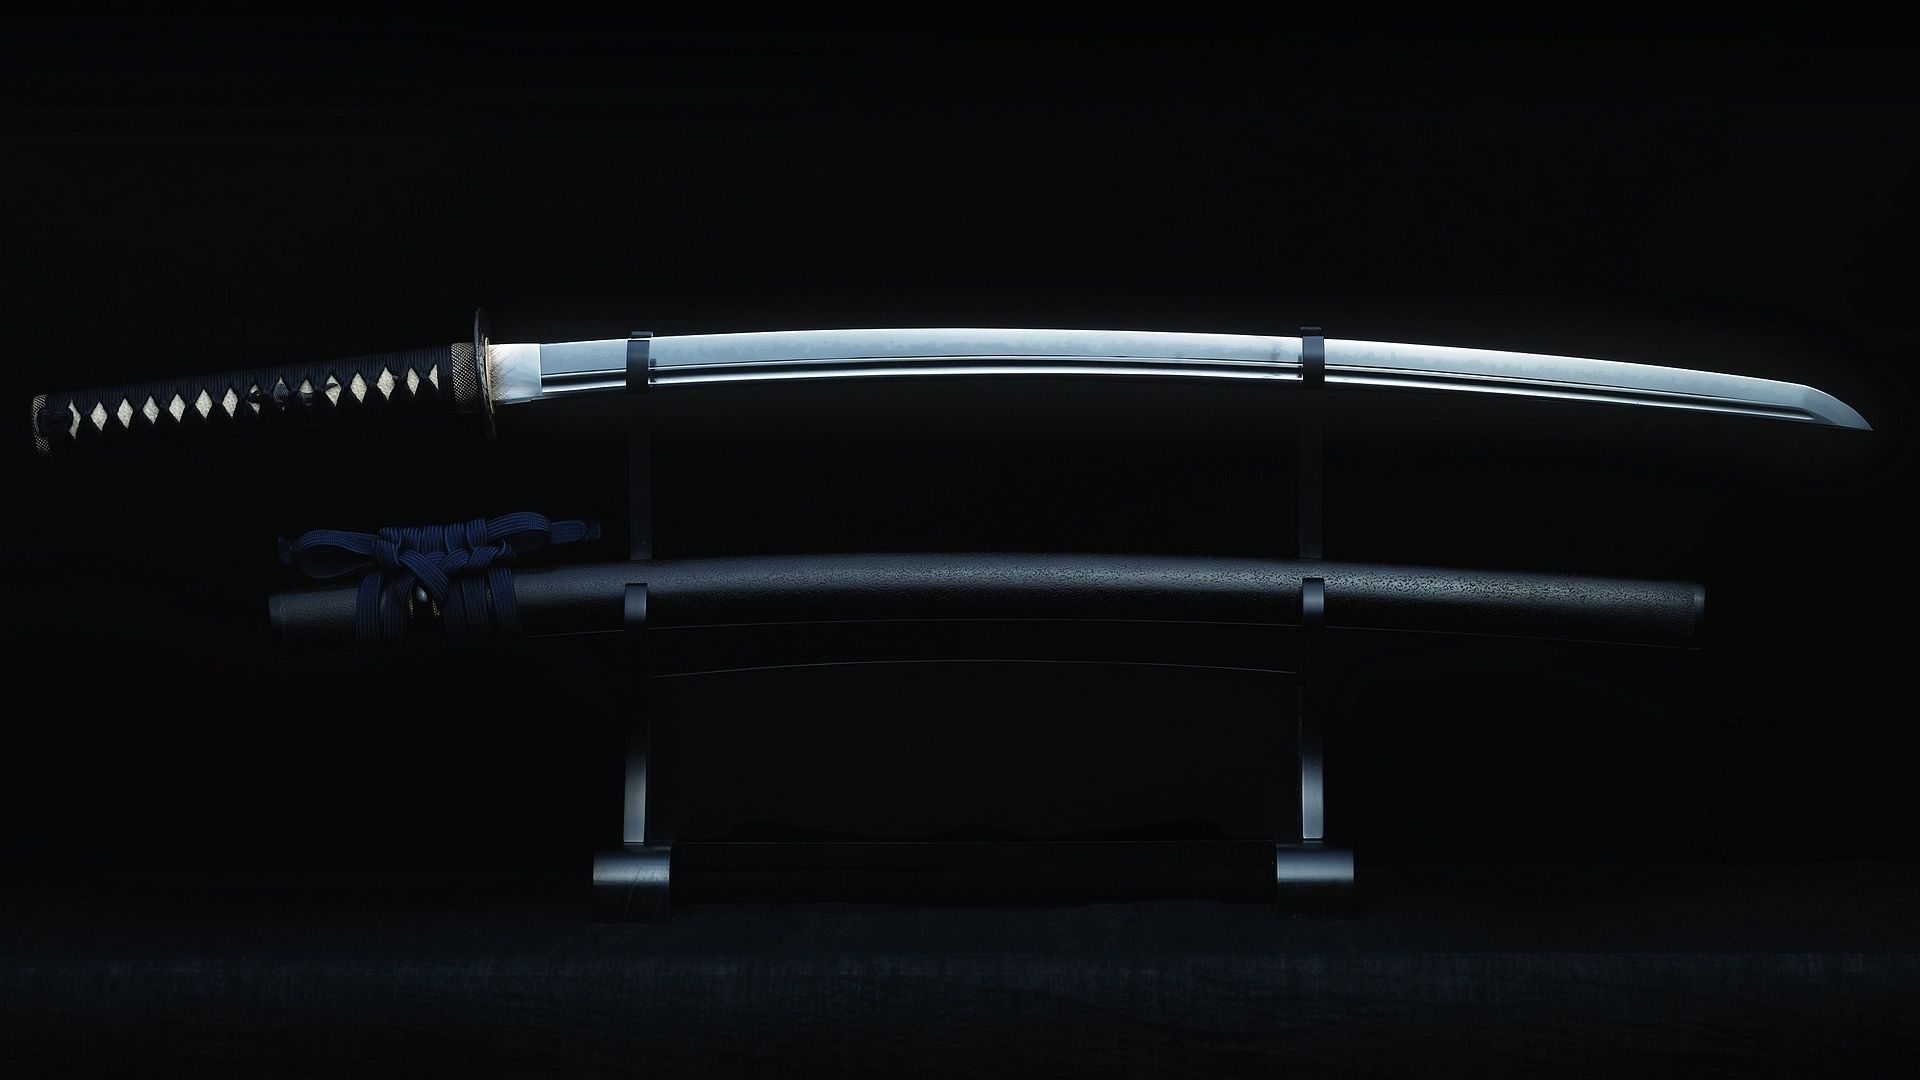 Samurai Sword Backgrounds